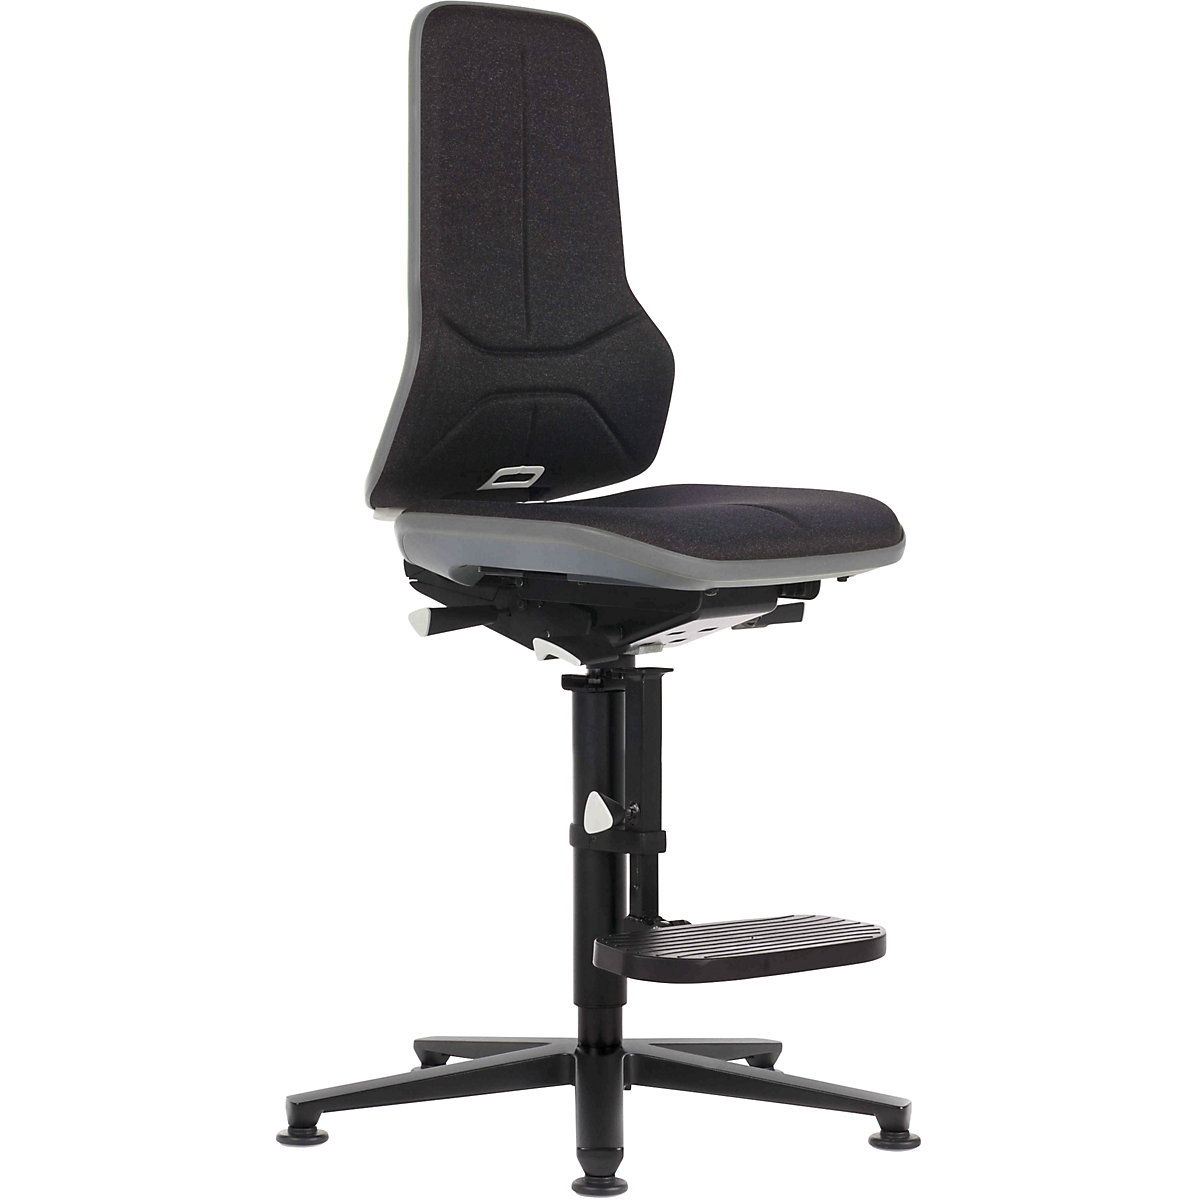 Radna okretna stolica NEON, kliznik, podrška za penjanje – bimos, stalni kontakt, tkanina, fleksibilna traka u sivoj boji-2